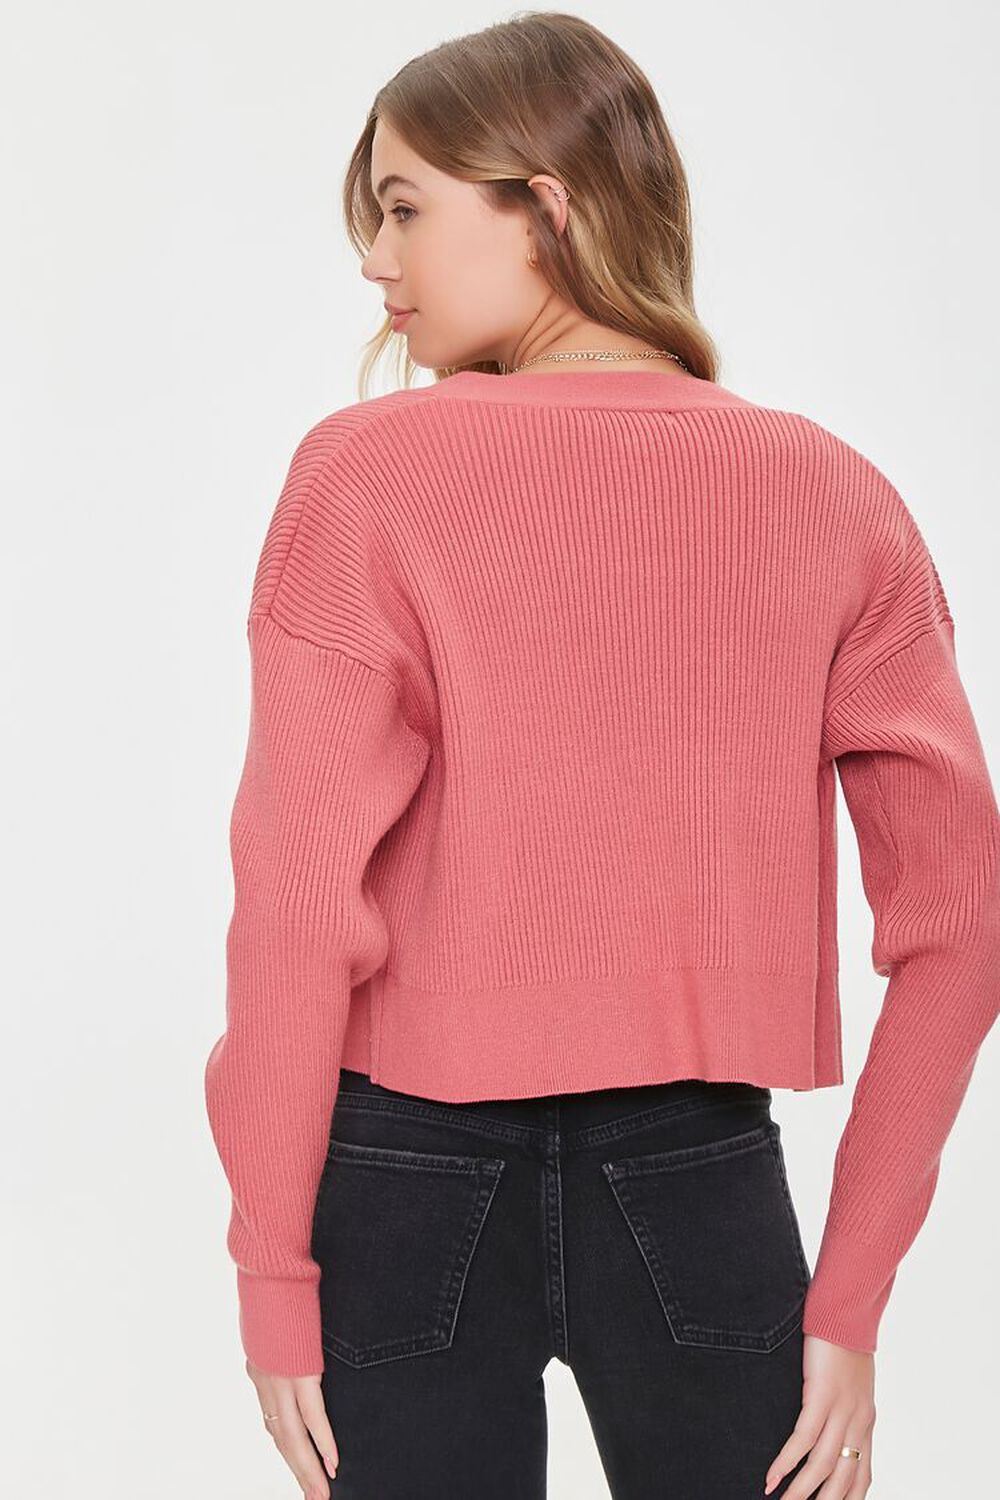 ROSE Ribbed Cardigan Sweater, image 3